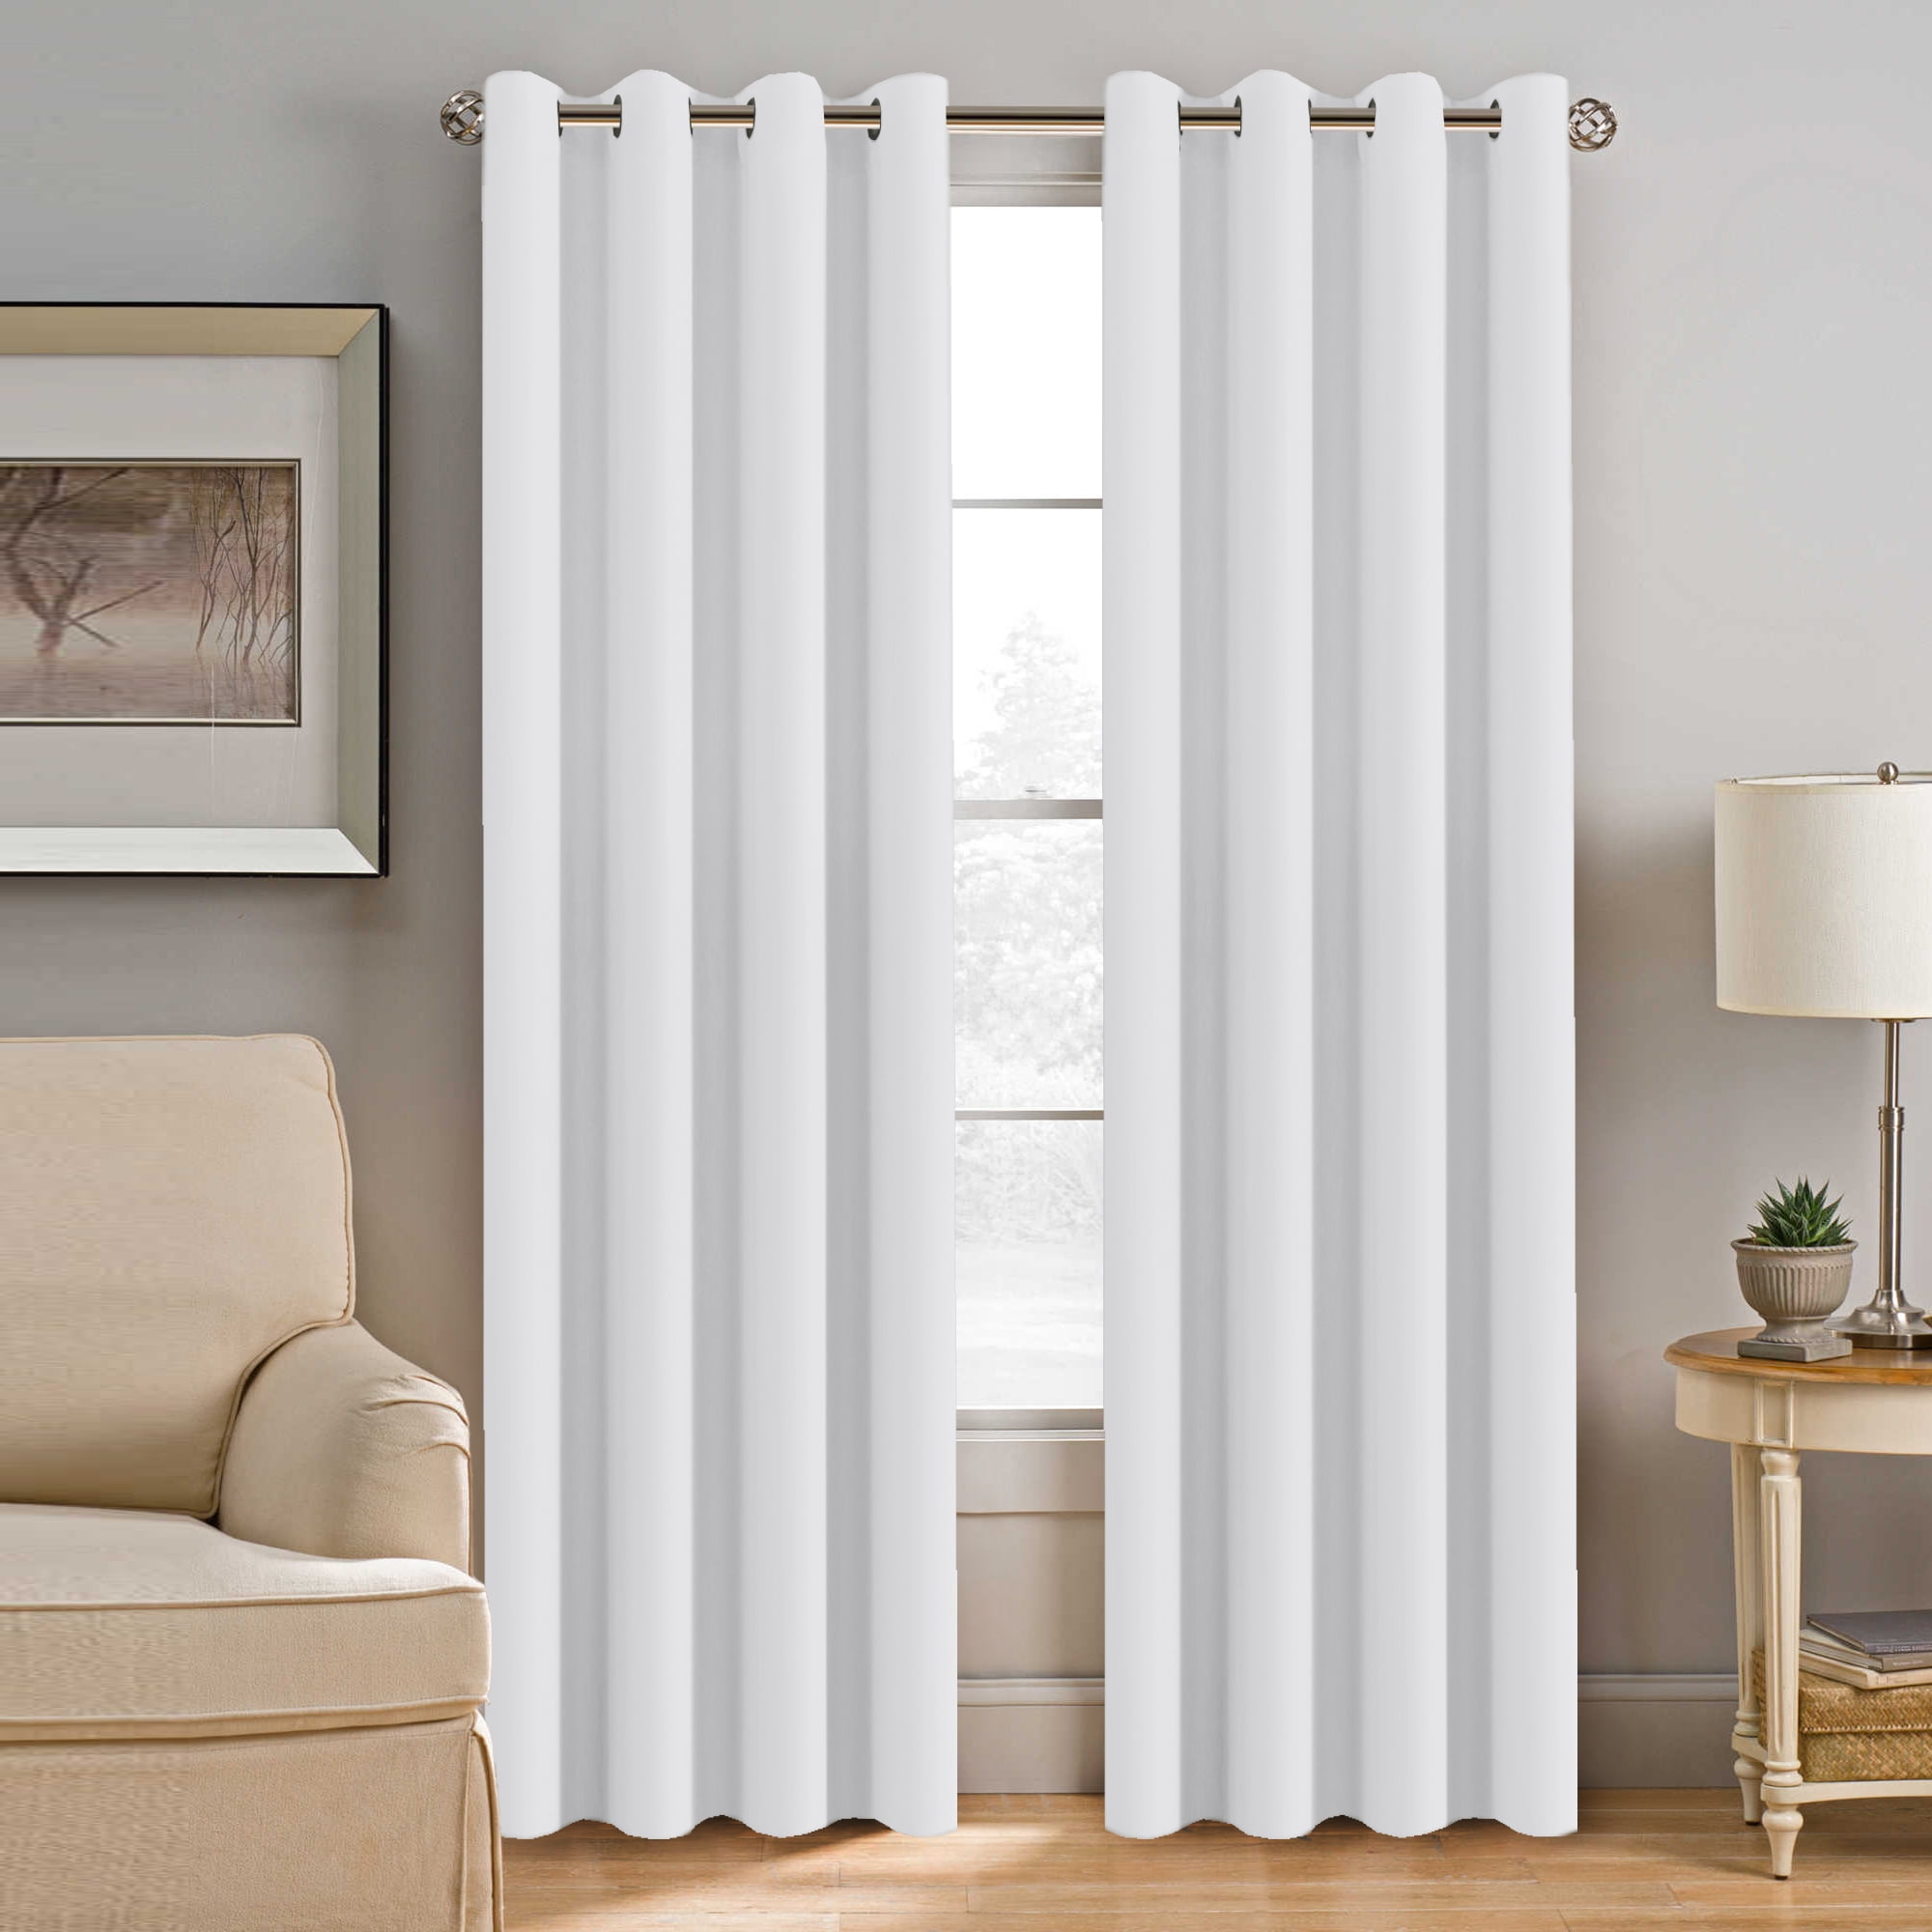 PrimeBeau Pure White Curtain 96 inch Length Window Treatment Room